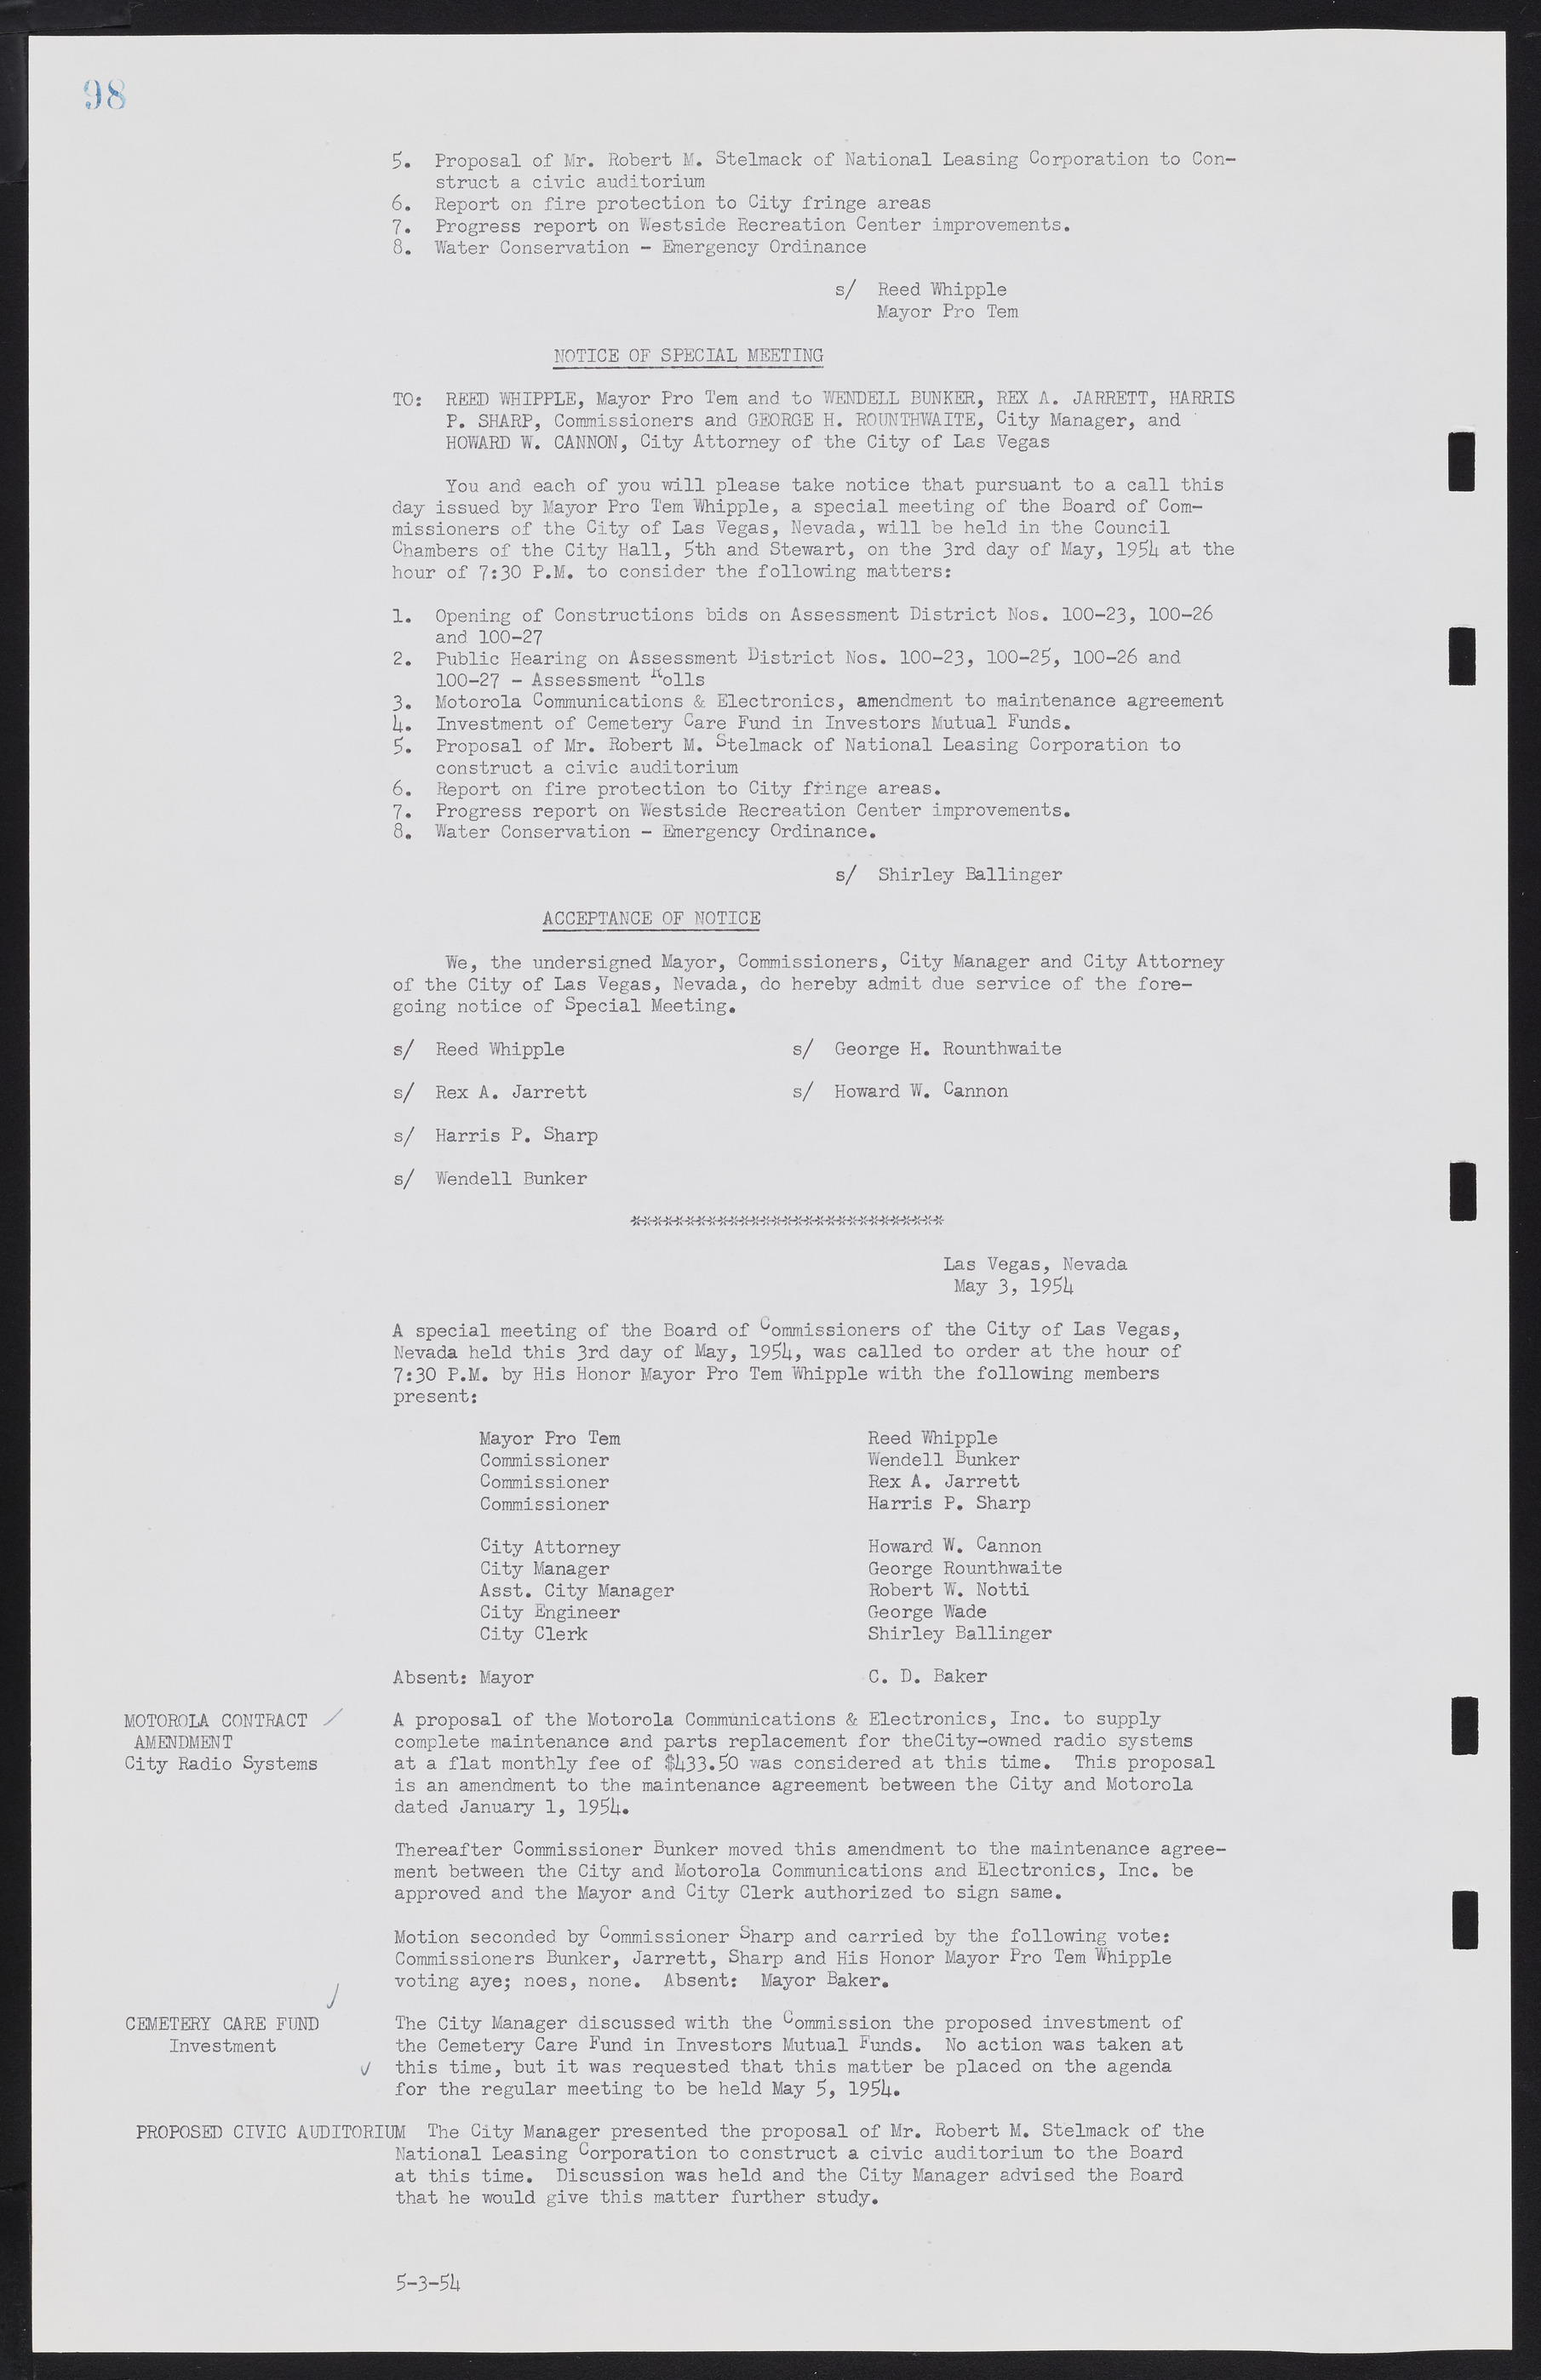 Las Vegas City Commission Minutes, February 17, 1954 to September 21, 1955, lvc000009-102